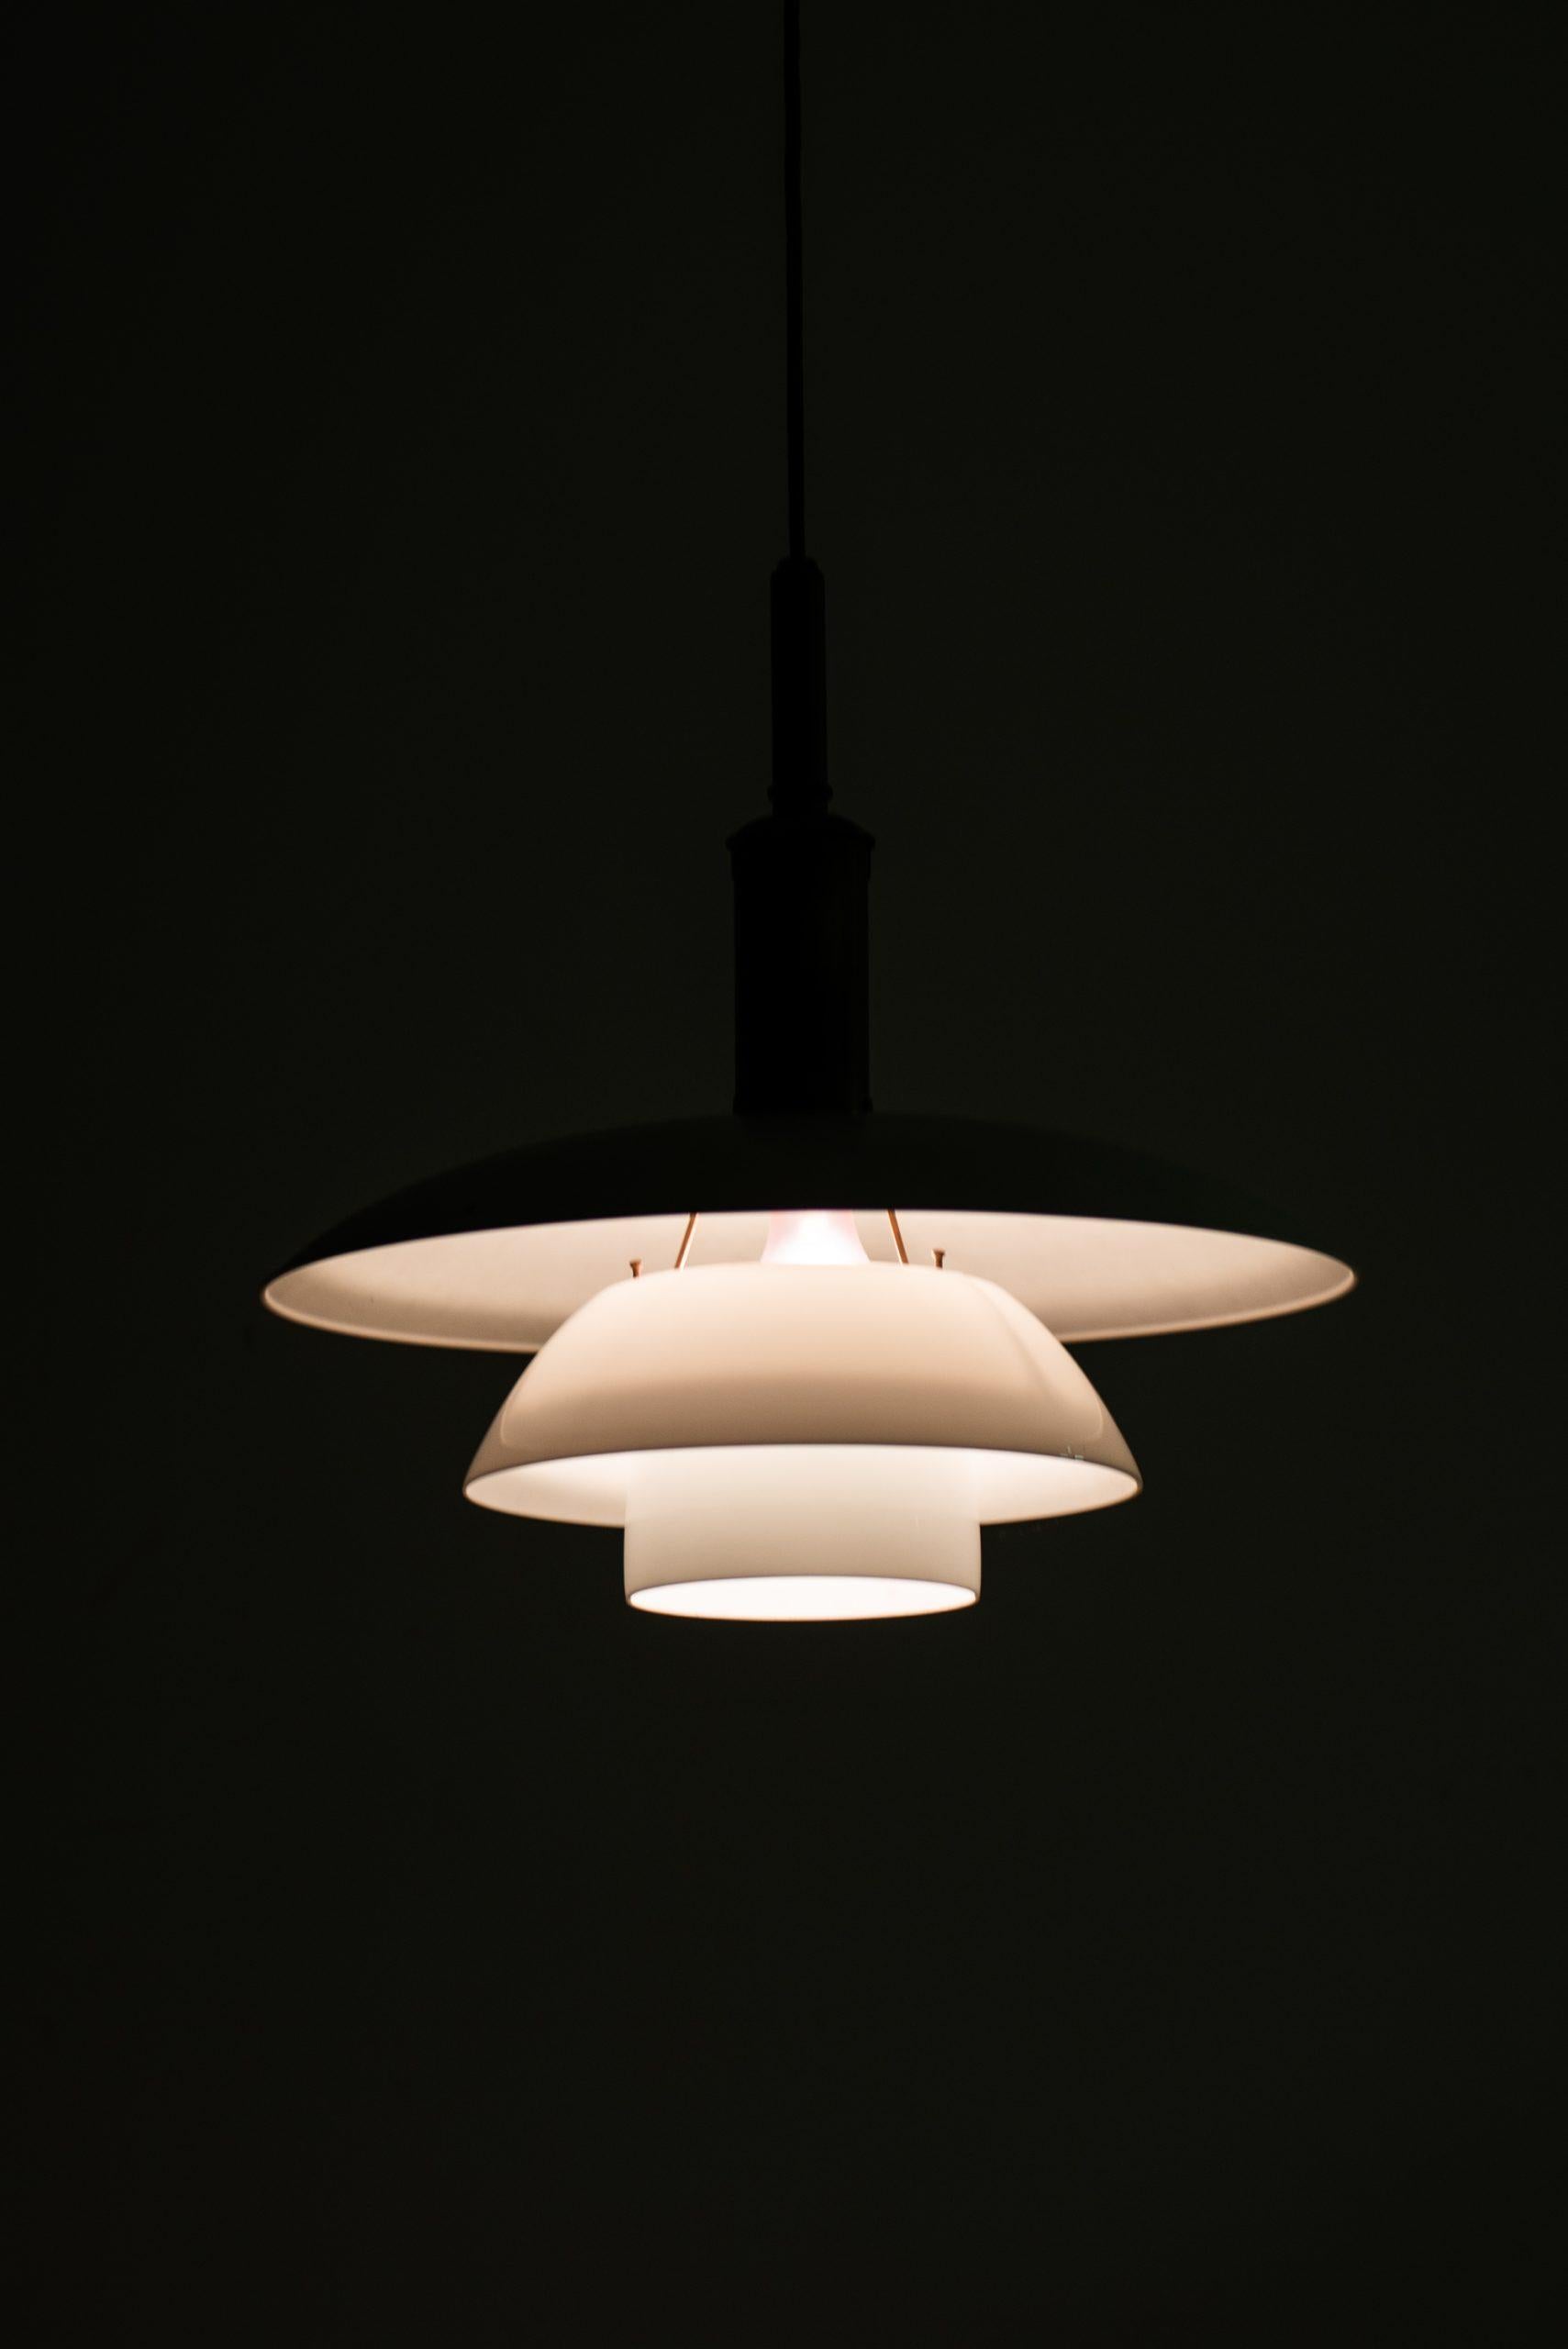 Scandinavian Modern Poul Henningsen Ceiling Lamp Model PH-5/5 Produced by Louis Poulsen in Denmark